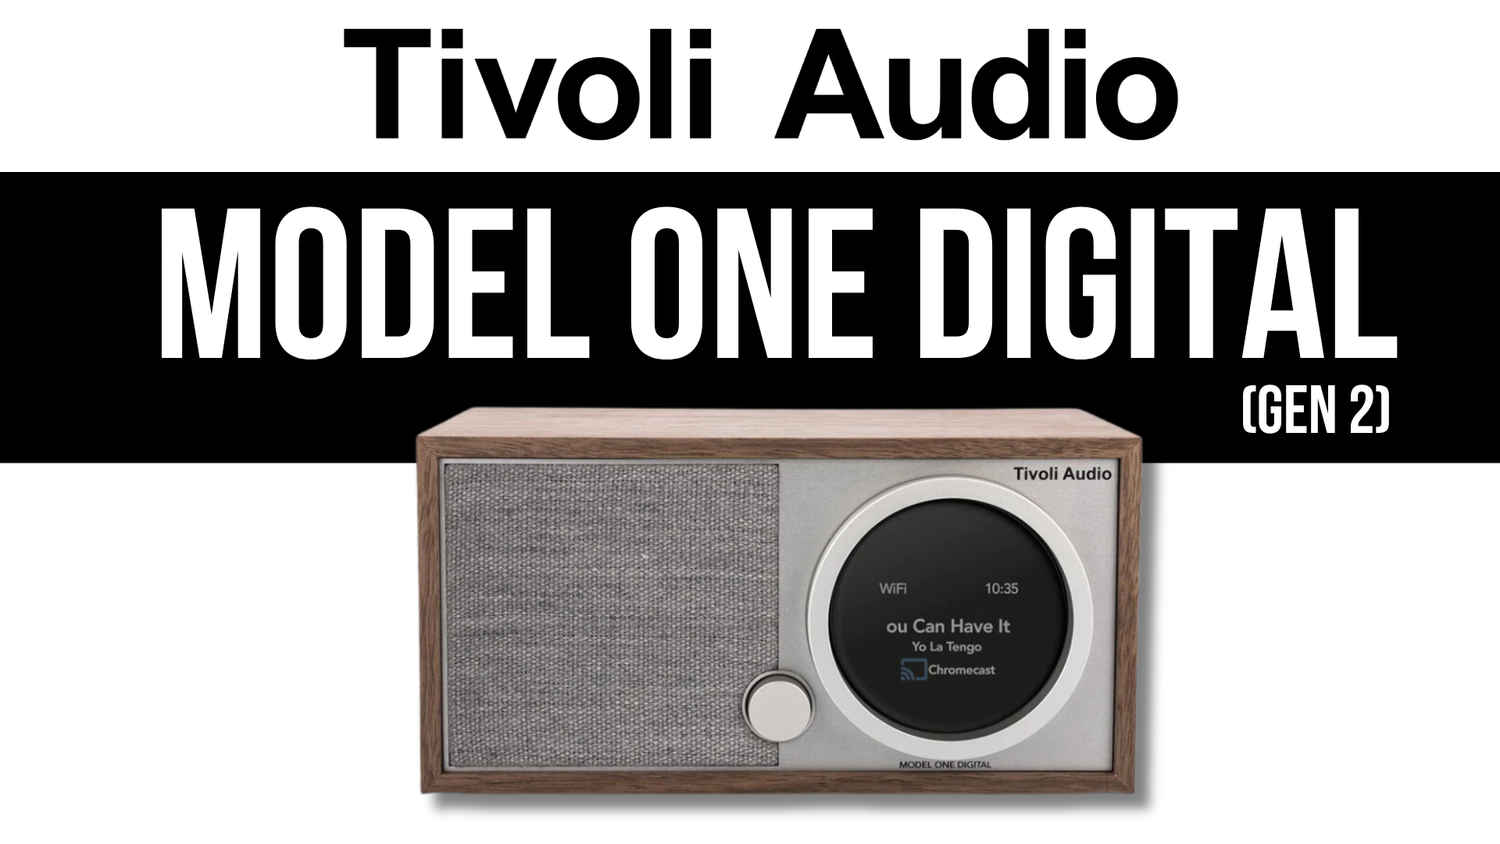 Tivoli Audio Model One Digital (Gen 2): Does exactly what it promises